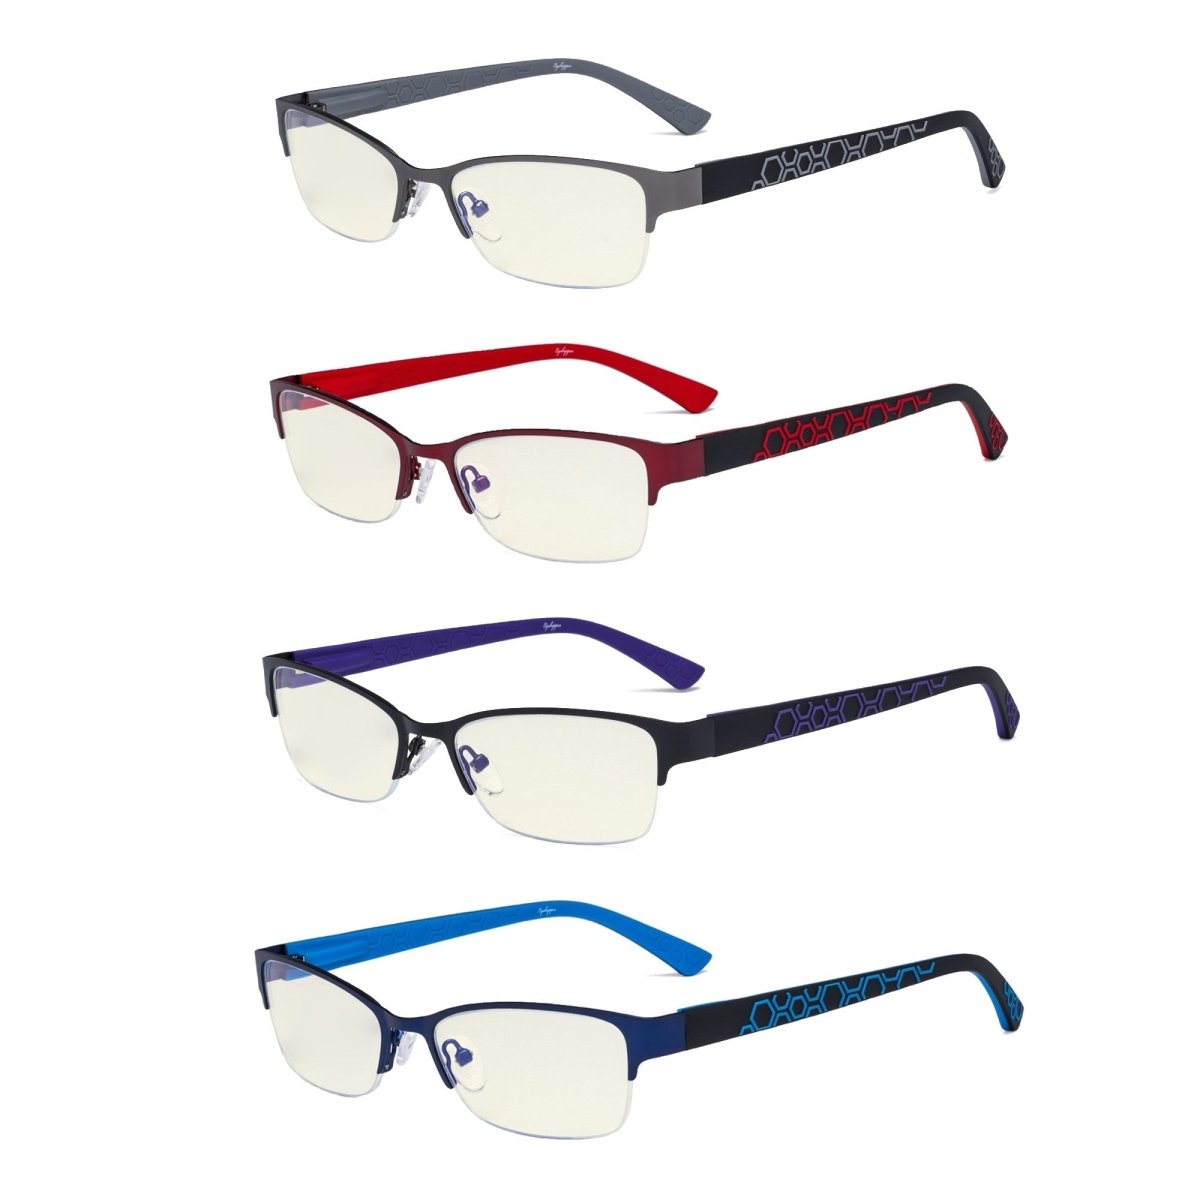 4 Pack Half-rim Blue Light Filter Eyeglasses Women UV17006eyekeeper.com